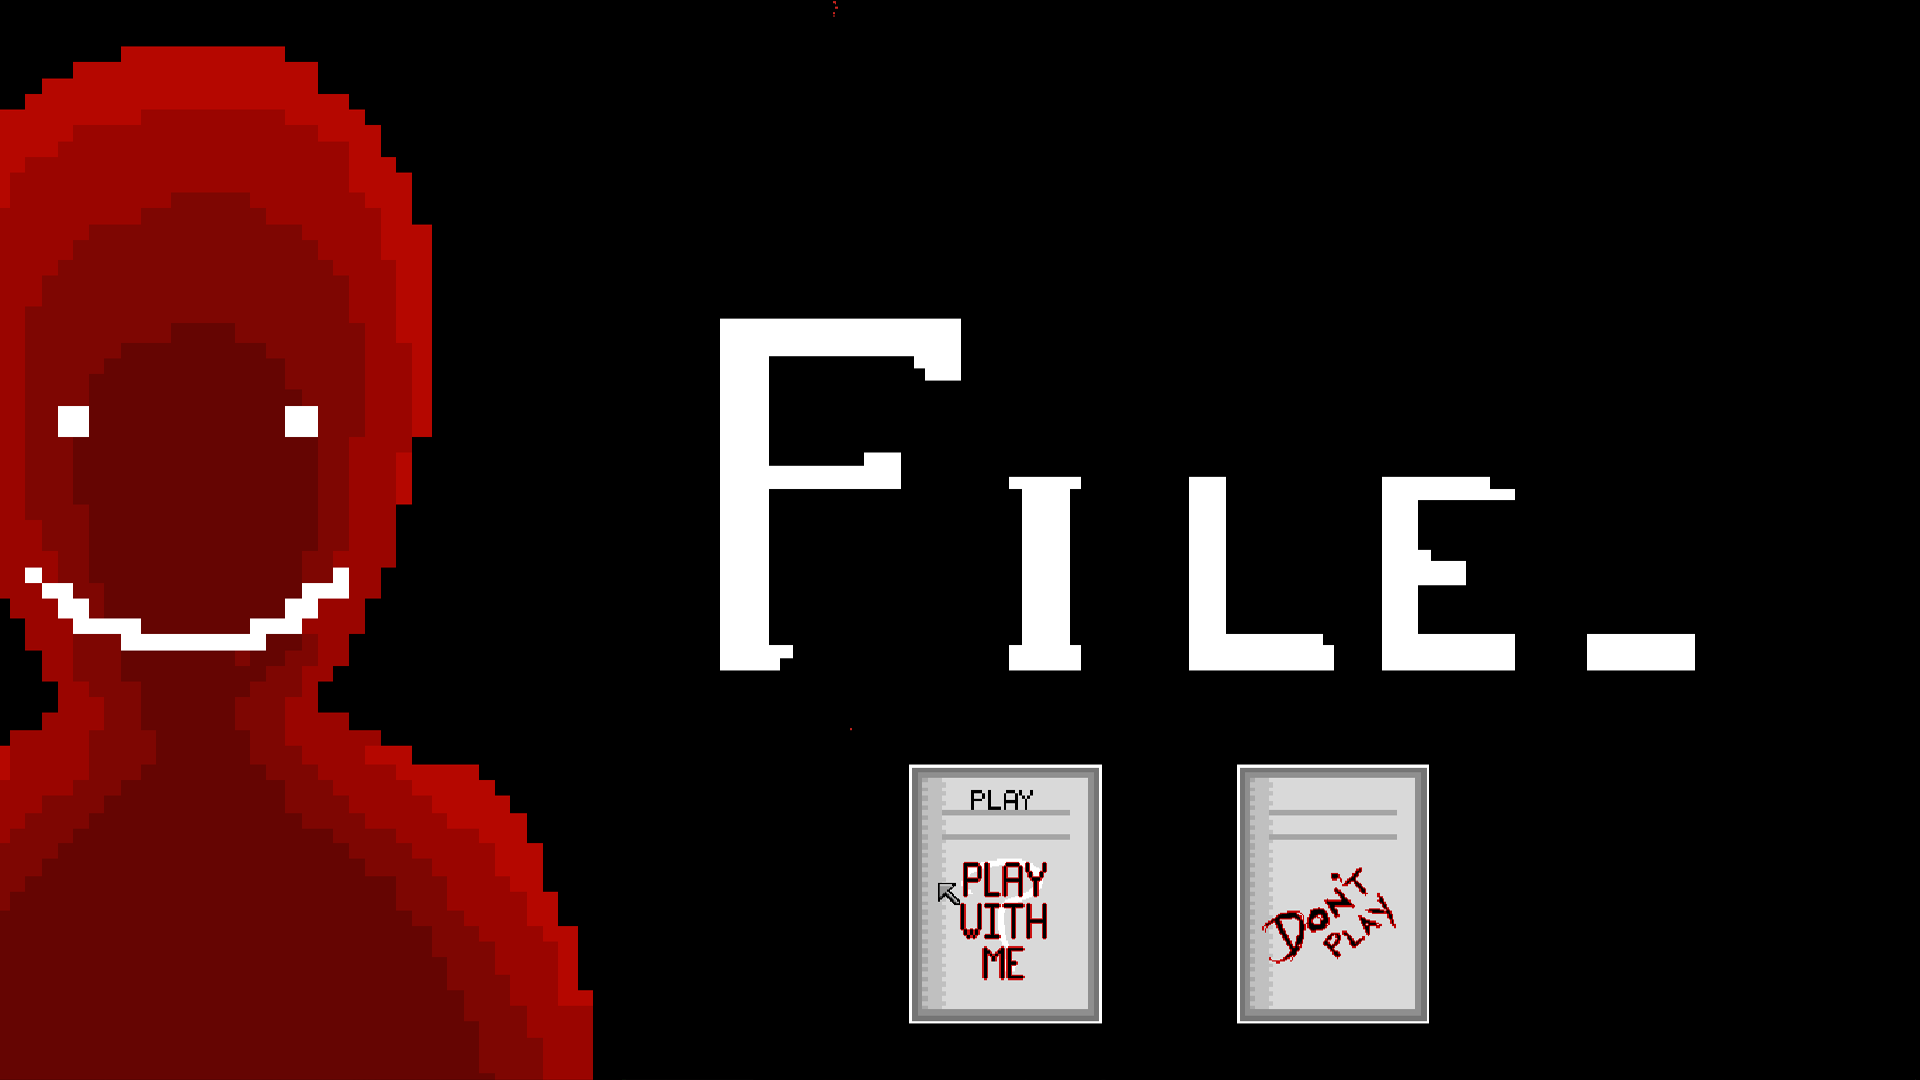 Exe файл. Картинка exe файла. File.exe игра.